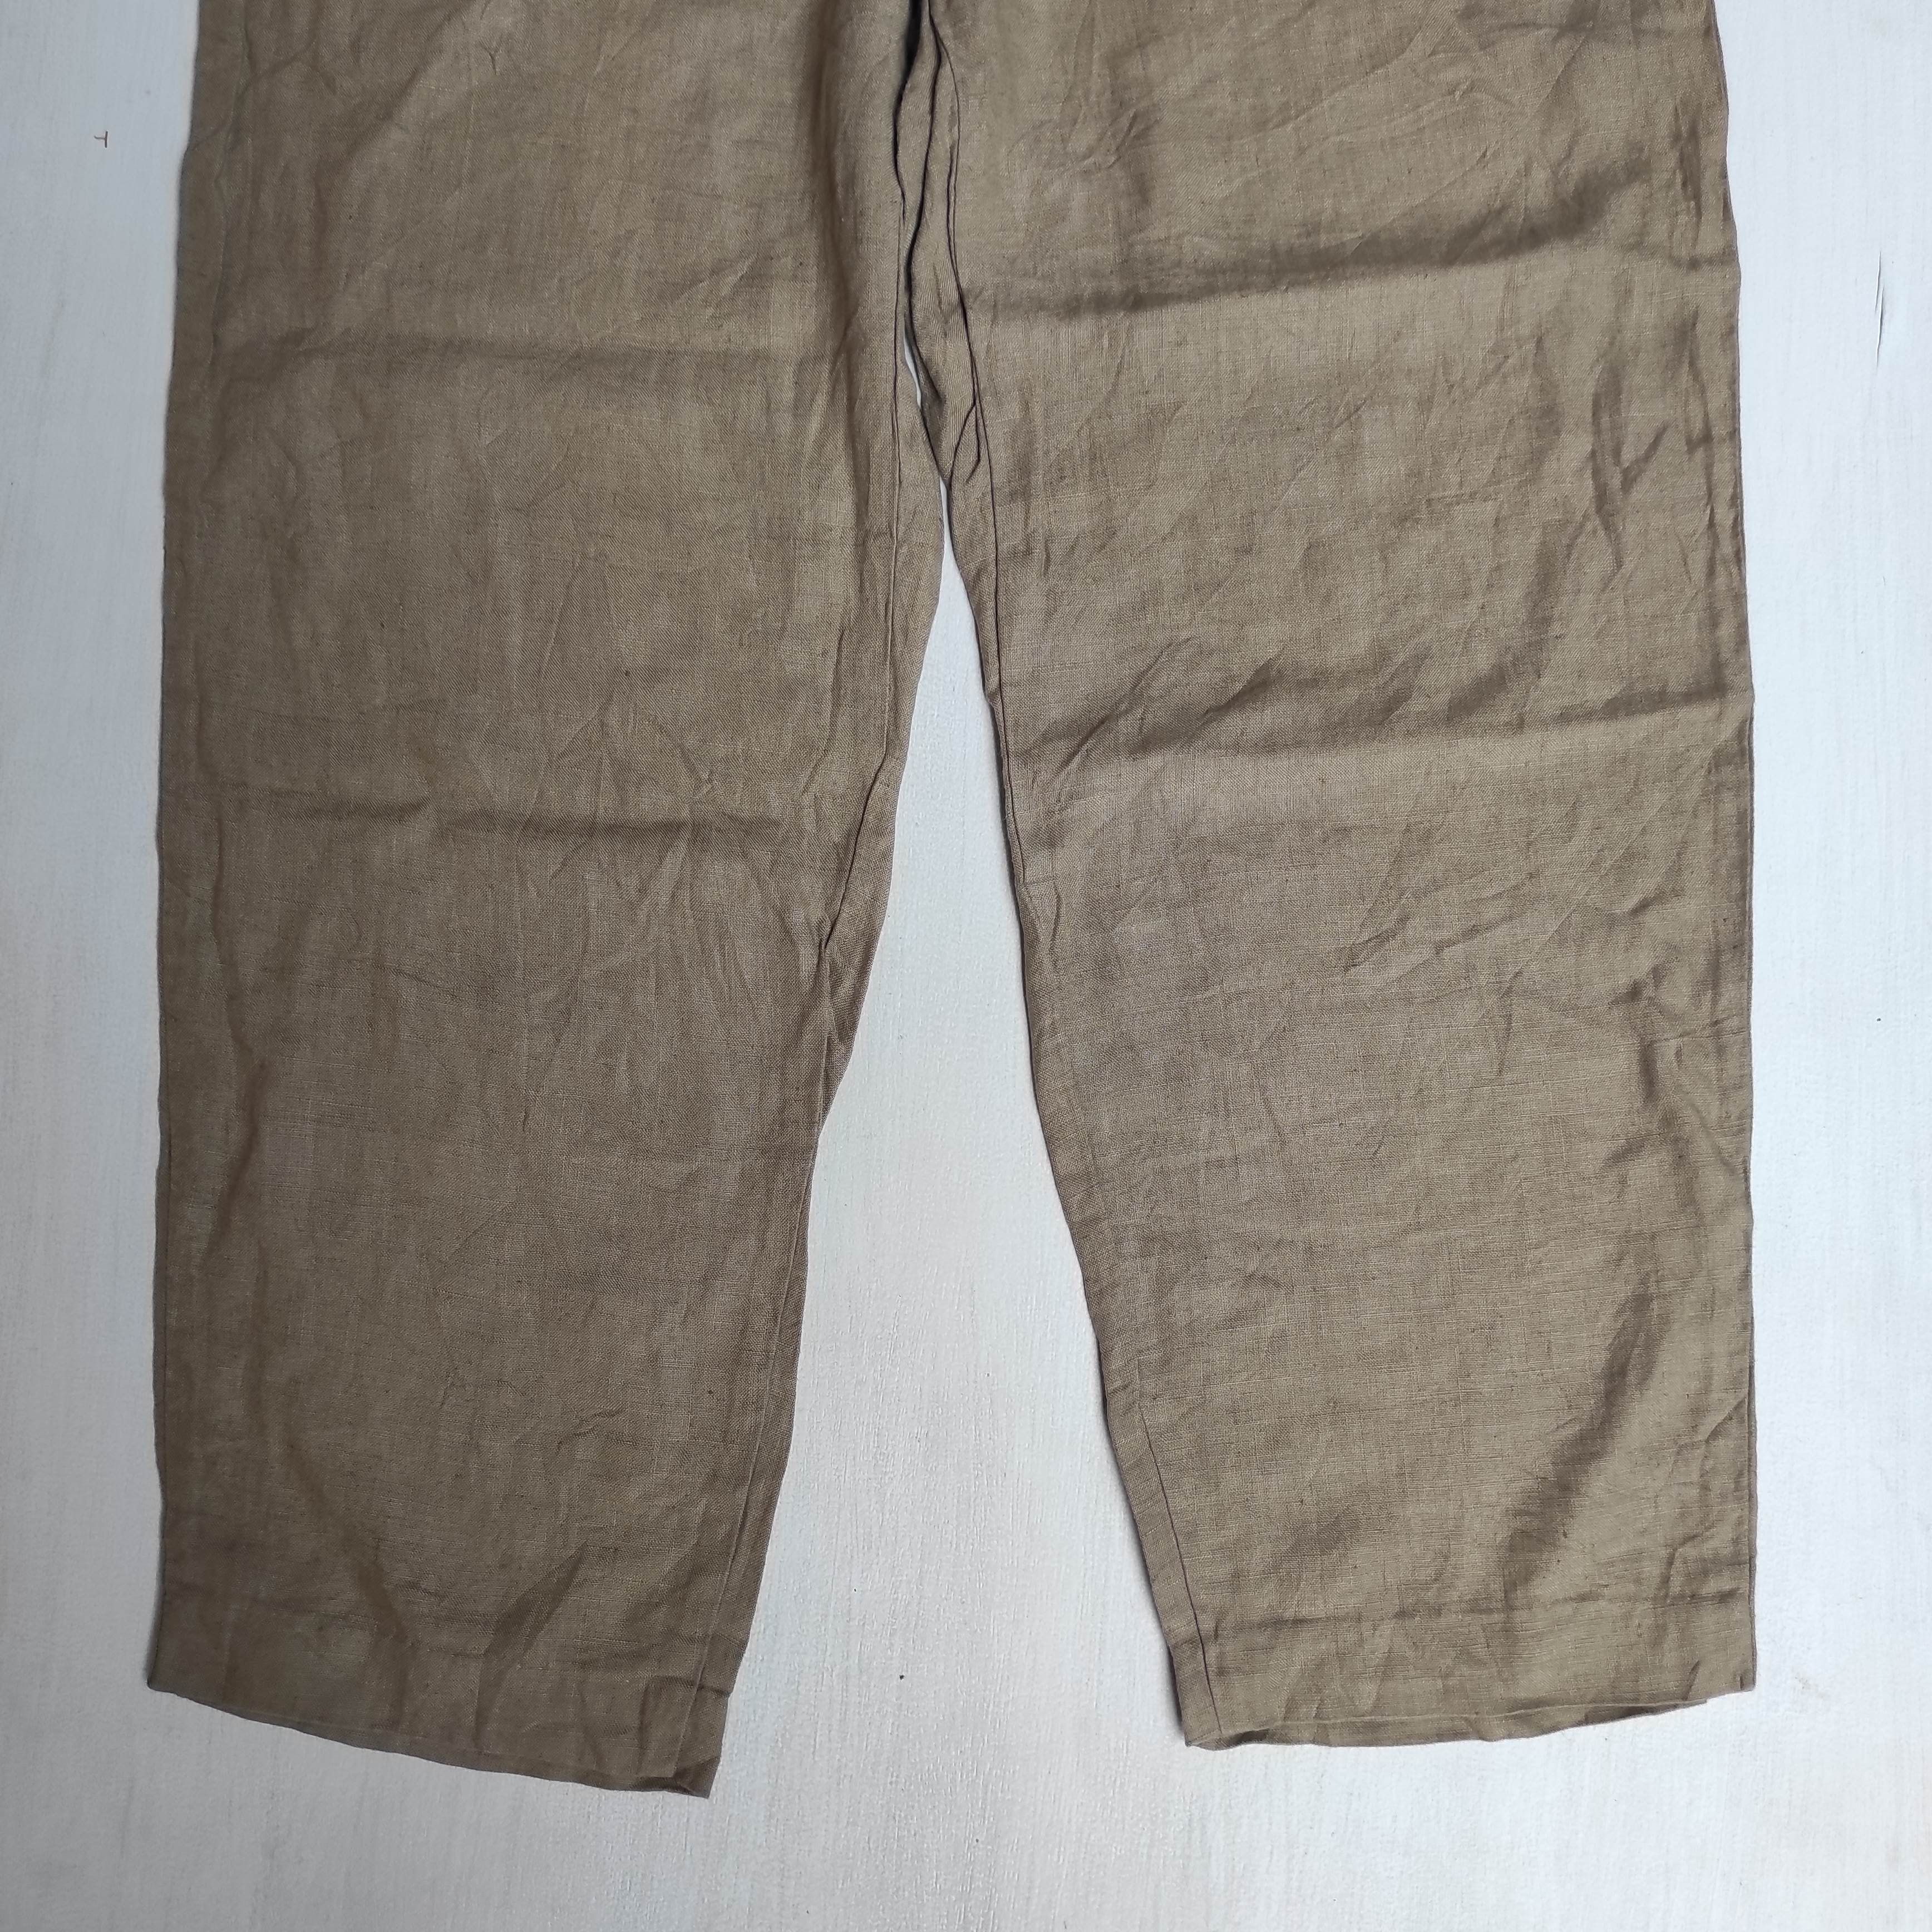 Vintage Vintage John Bull Linen Pants Size US 34 / EU 50 - 4 Thumbnail